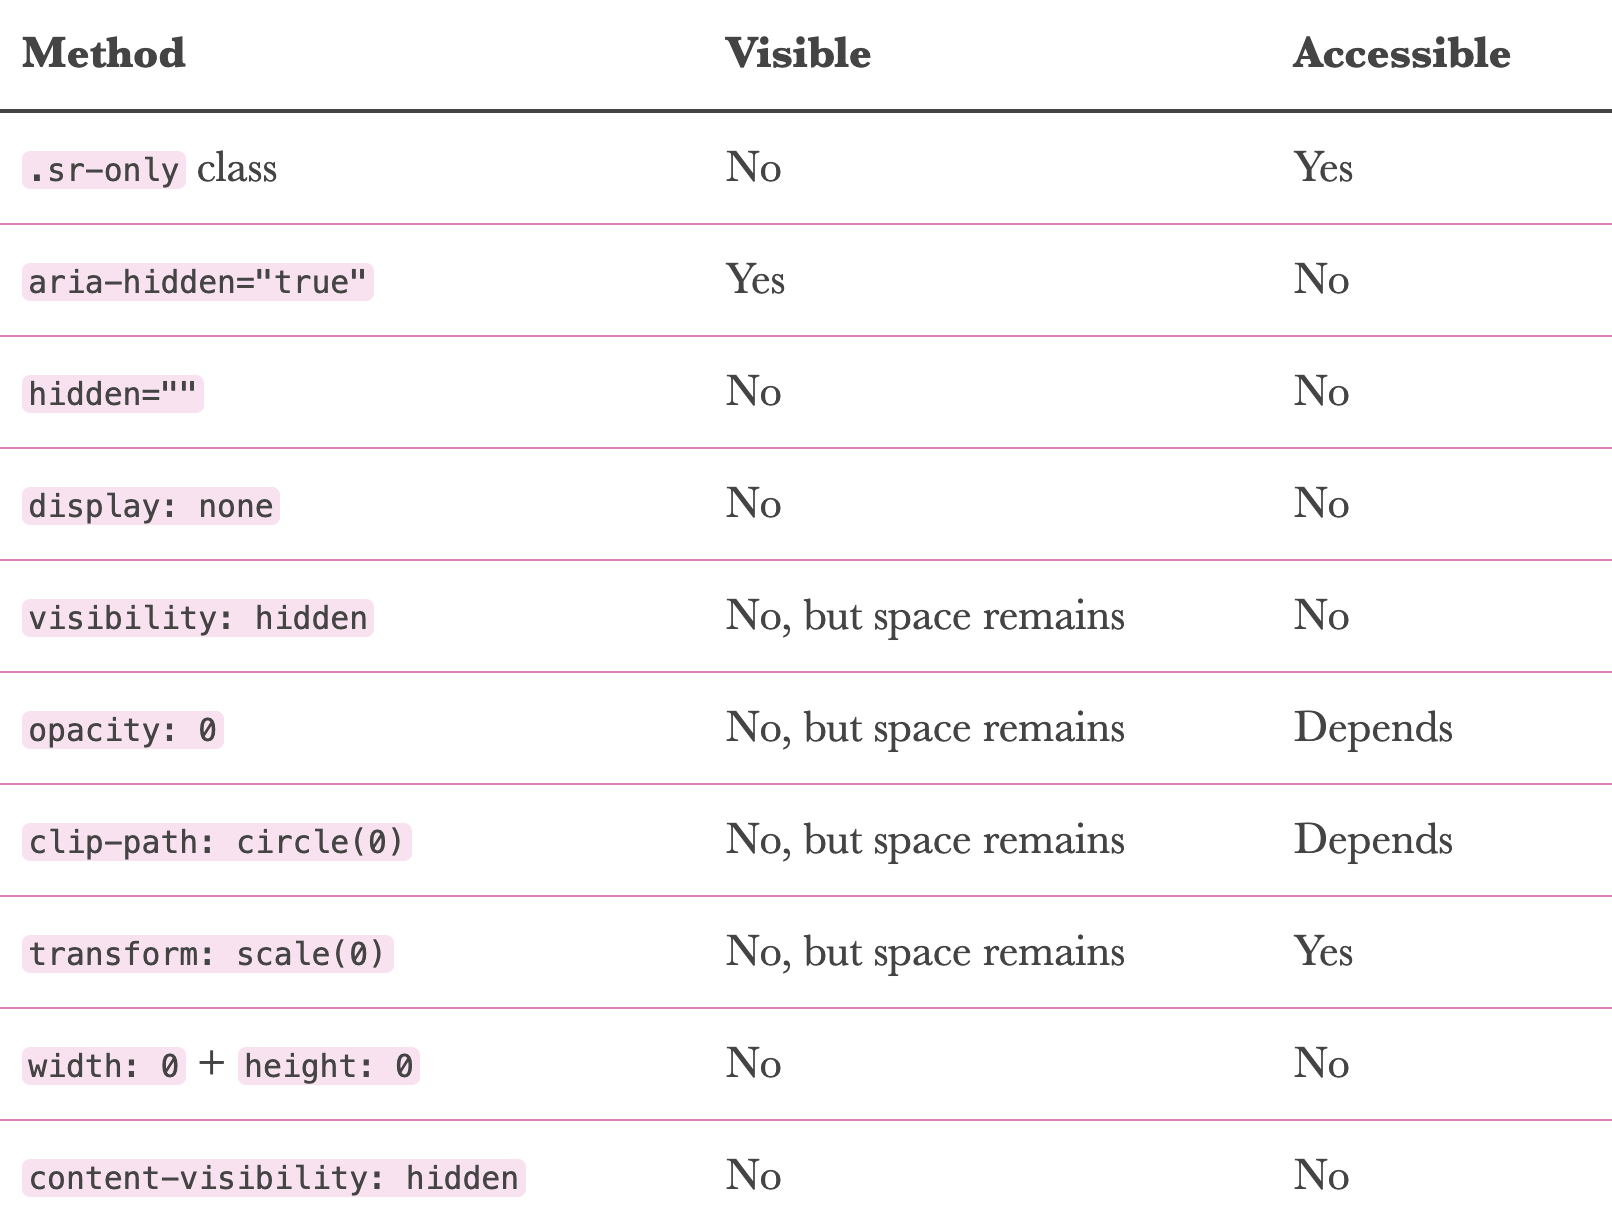 不同方法在Visible和Accessible上的表现